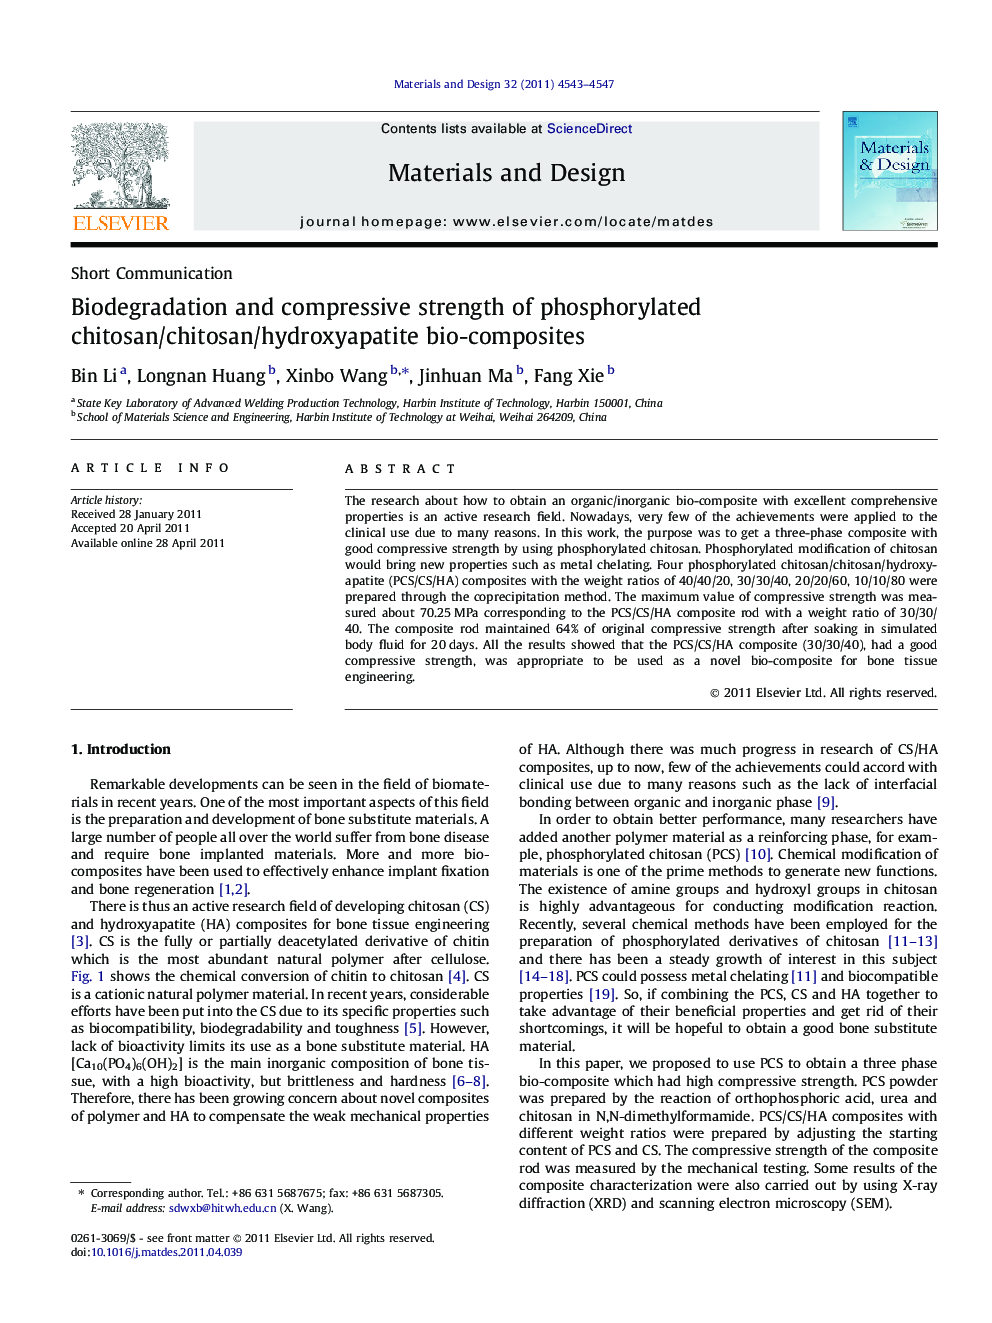 Biodegradation and compressive strength of phosphorylated chitosan/chitosan/hydroxyapatite bio-composites